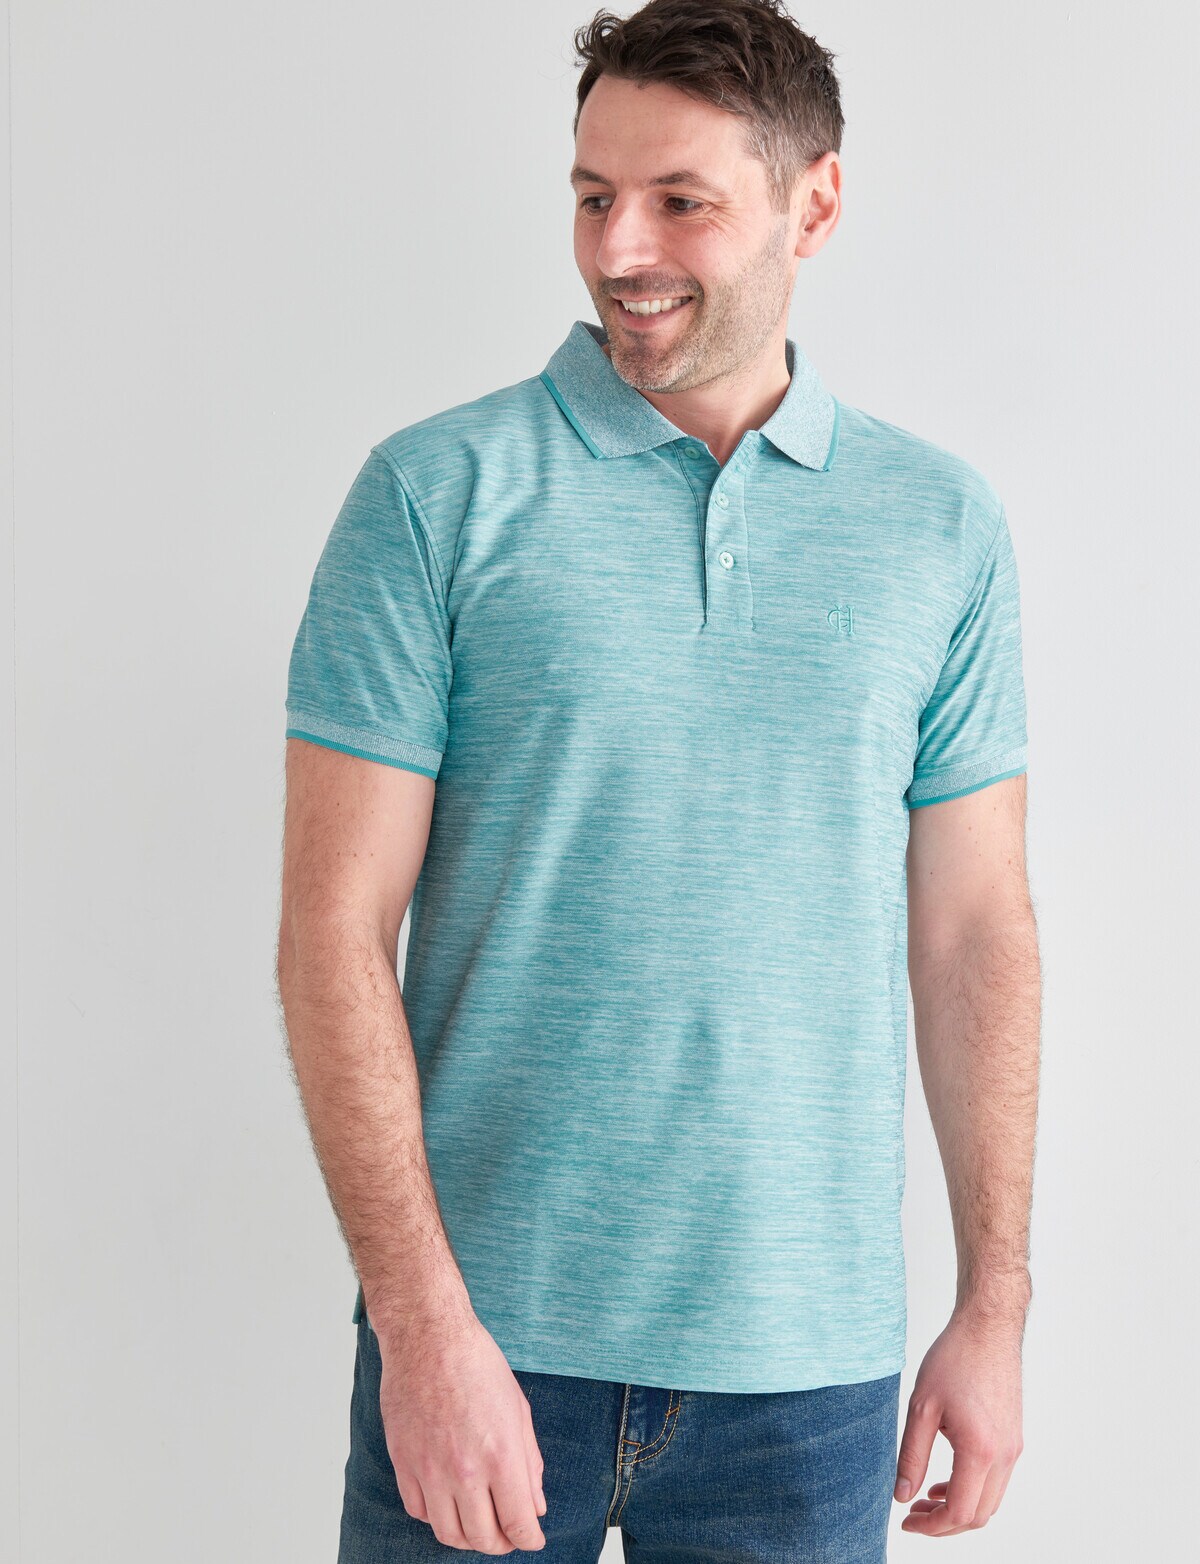 Chisel Textured Quick Dry Polo Shirt, Aqua - T-shirts, Singlets & Polos